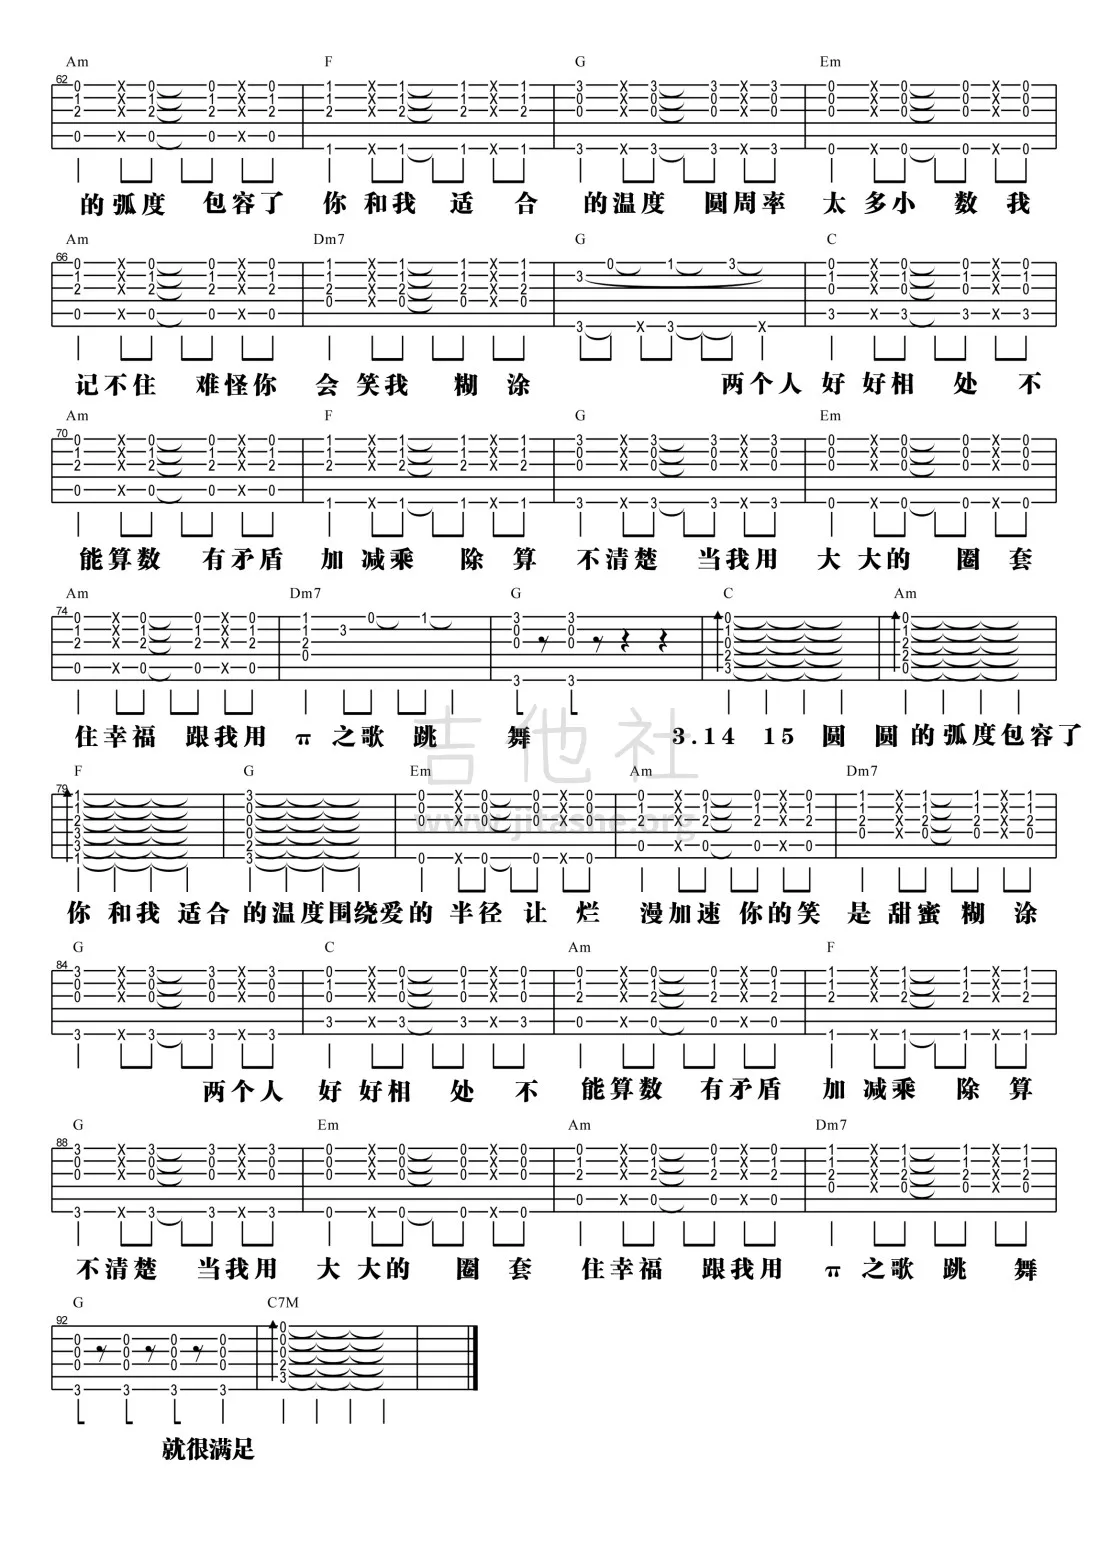 π之歌吉他谱第(3)页